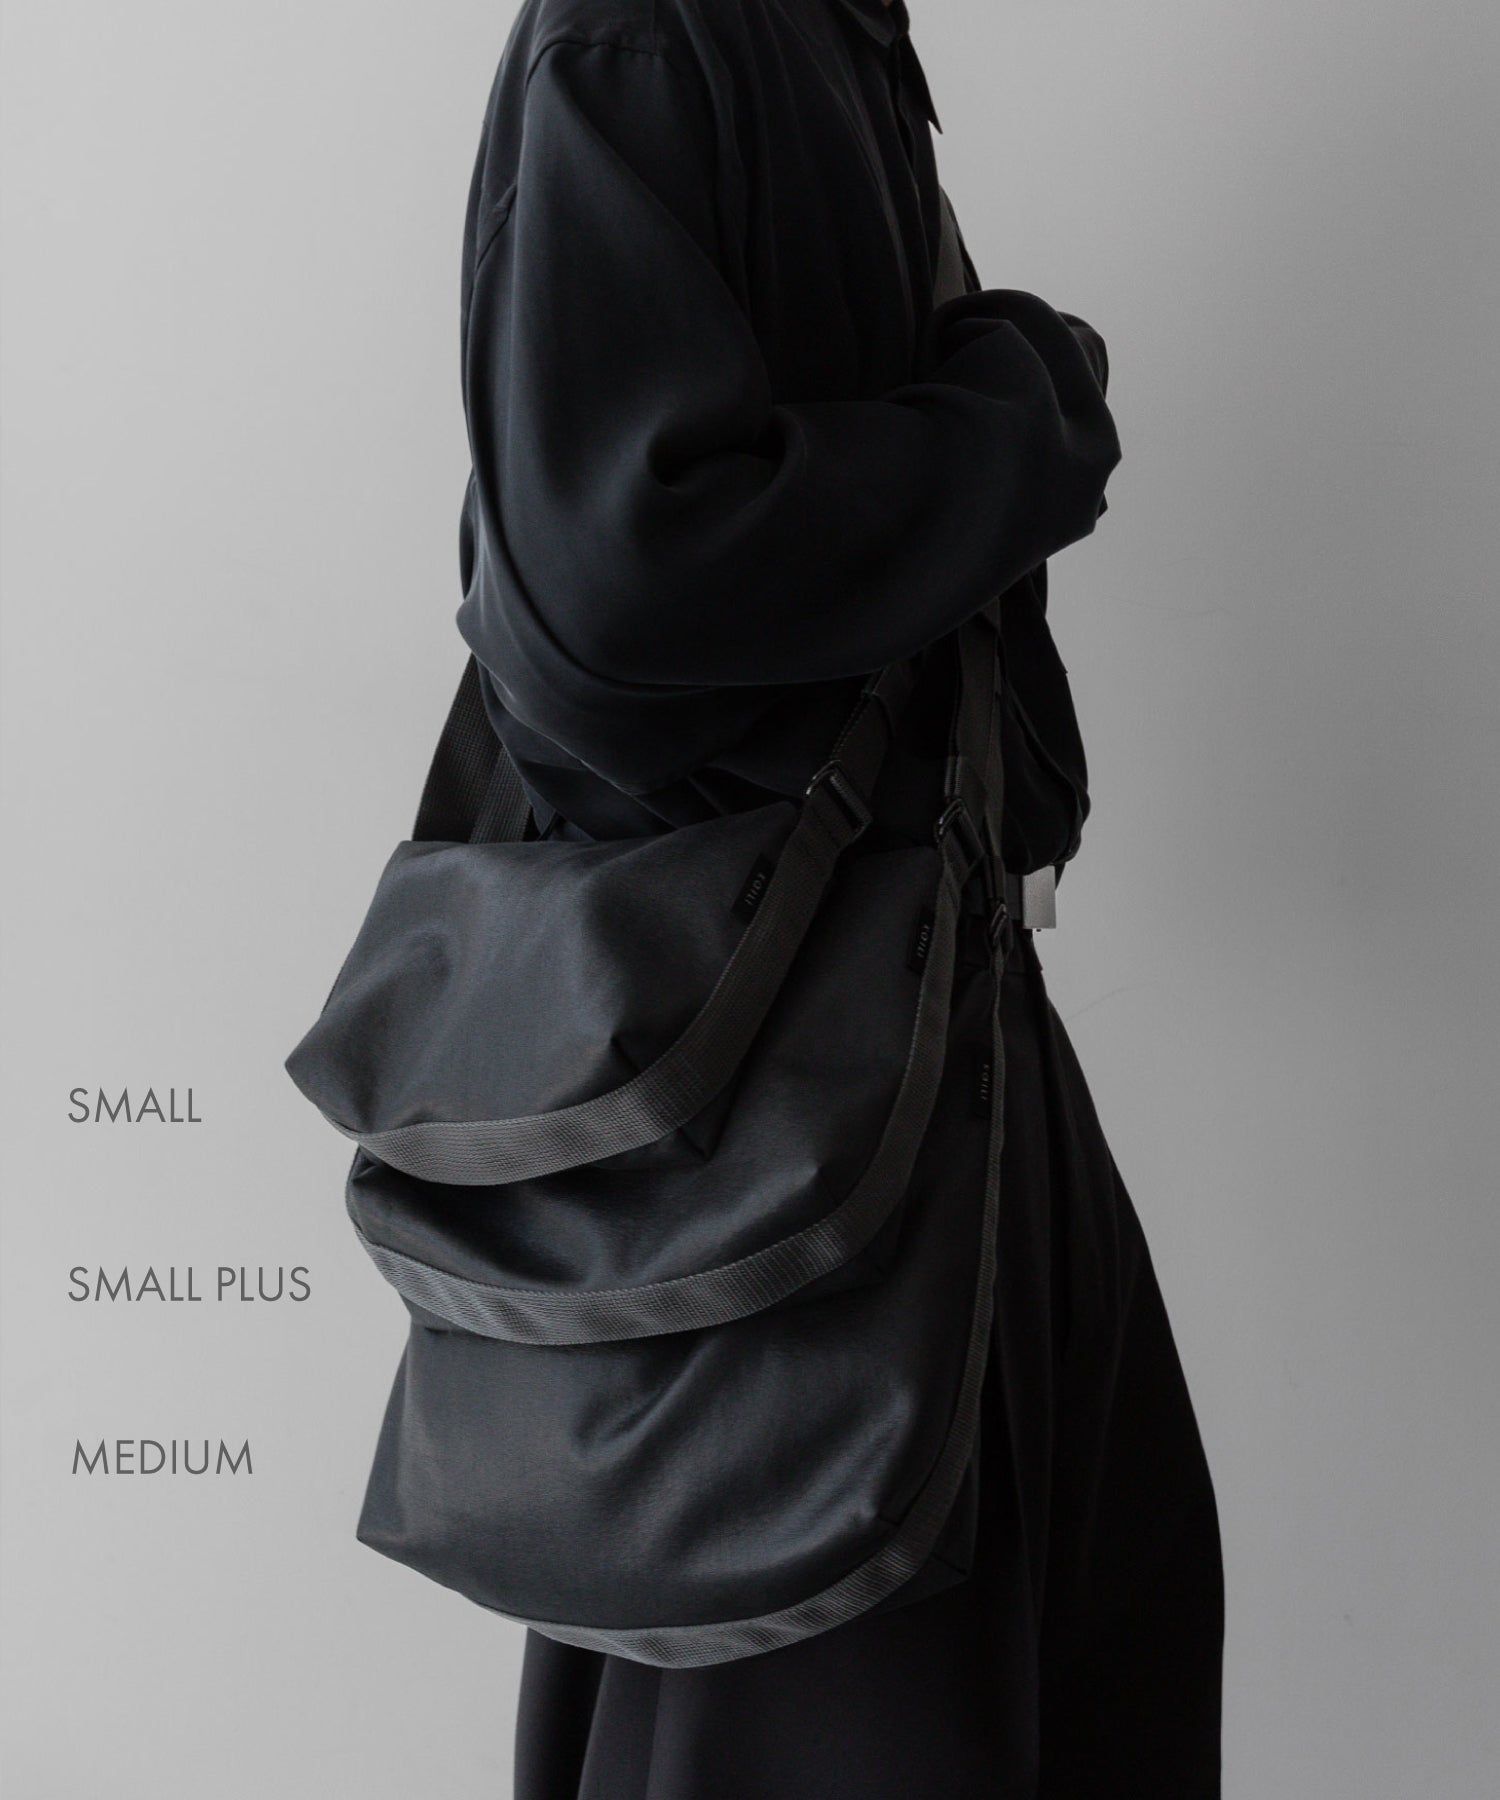 KaILI - カイリのIREKO POUCH UN "SMALL" - BLACK 公式通販サイトsession福岡セレクトショップ